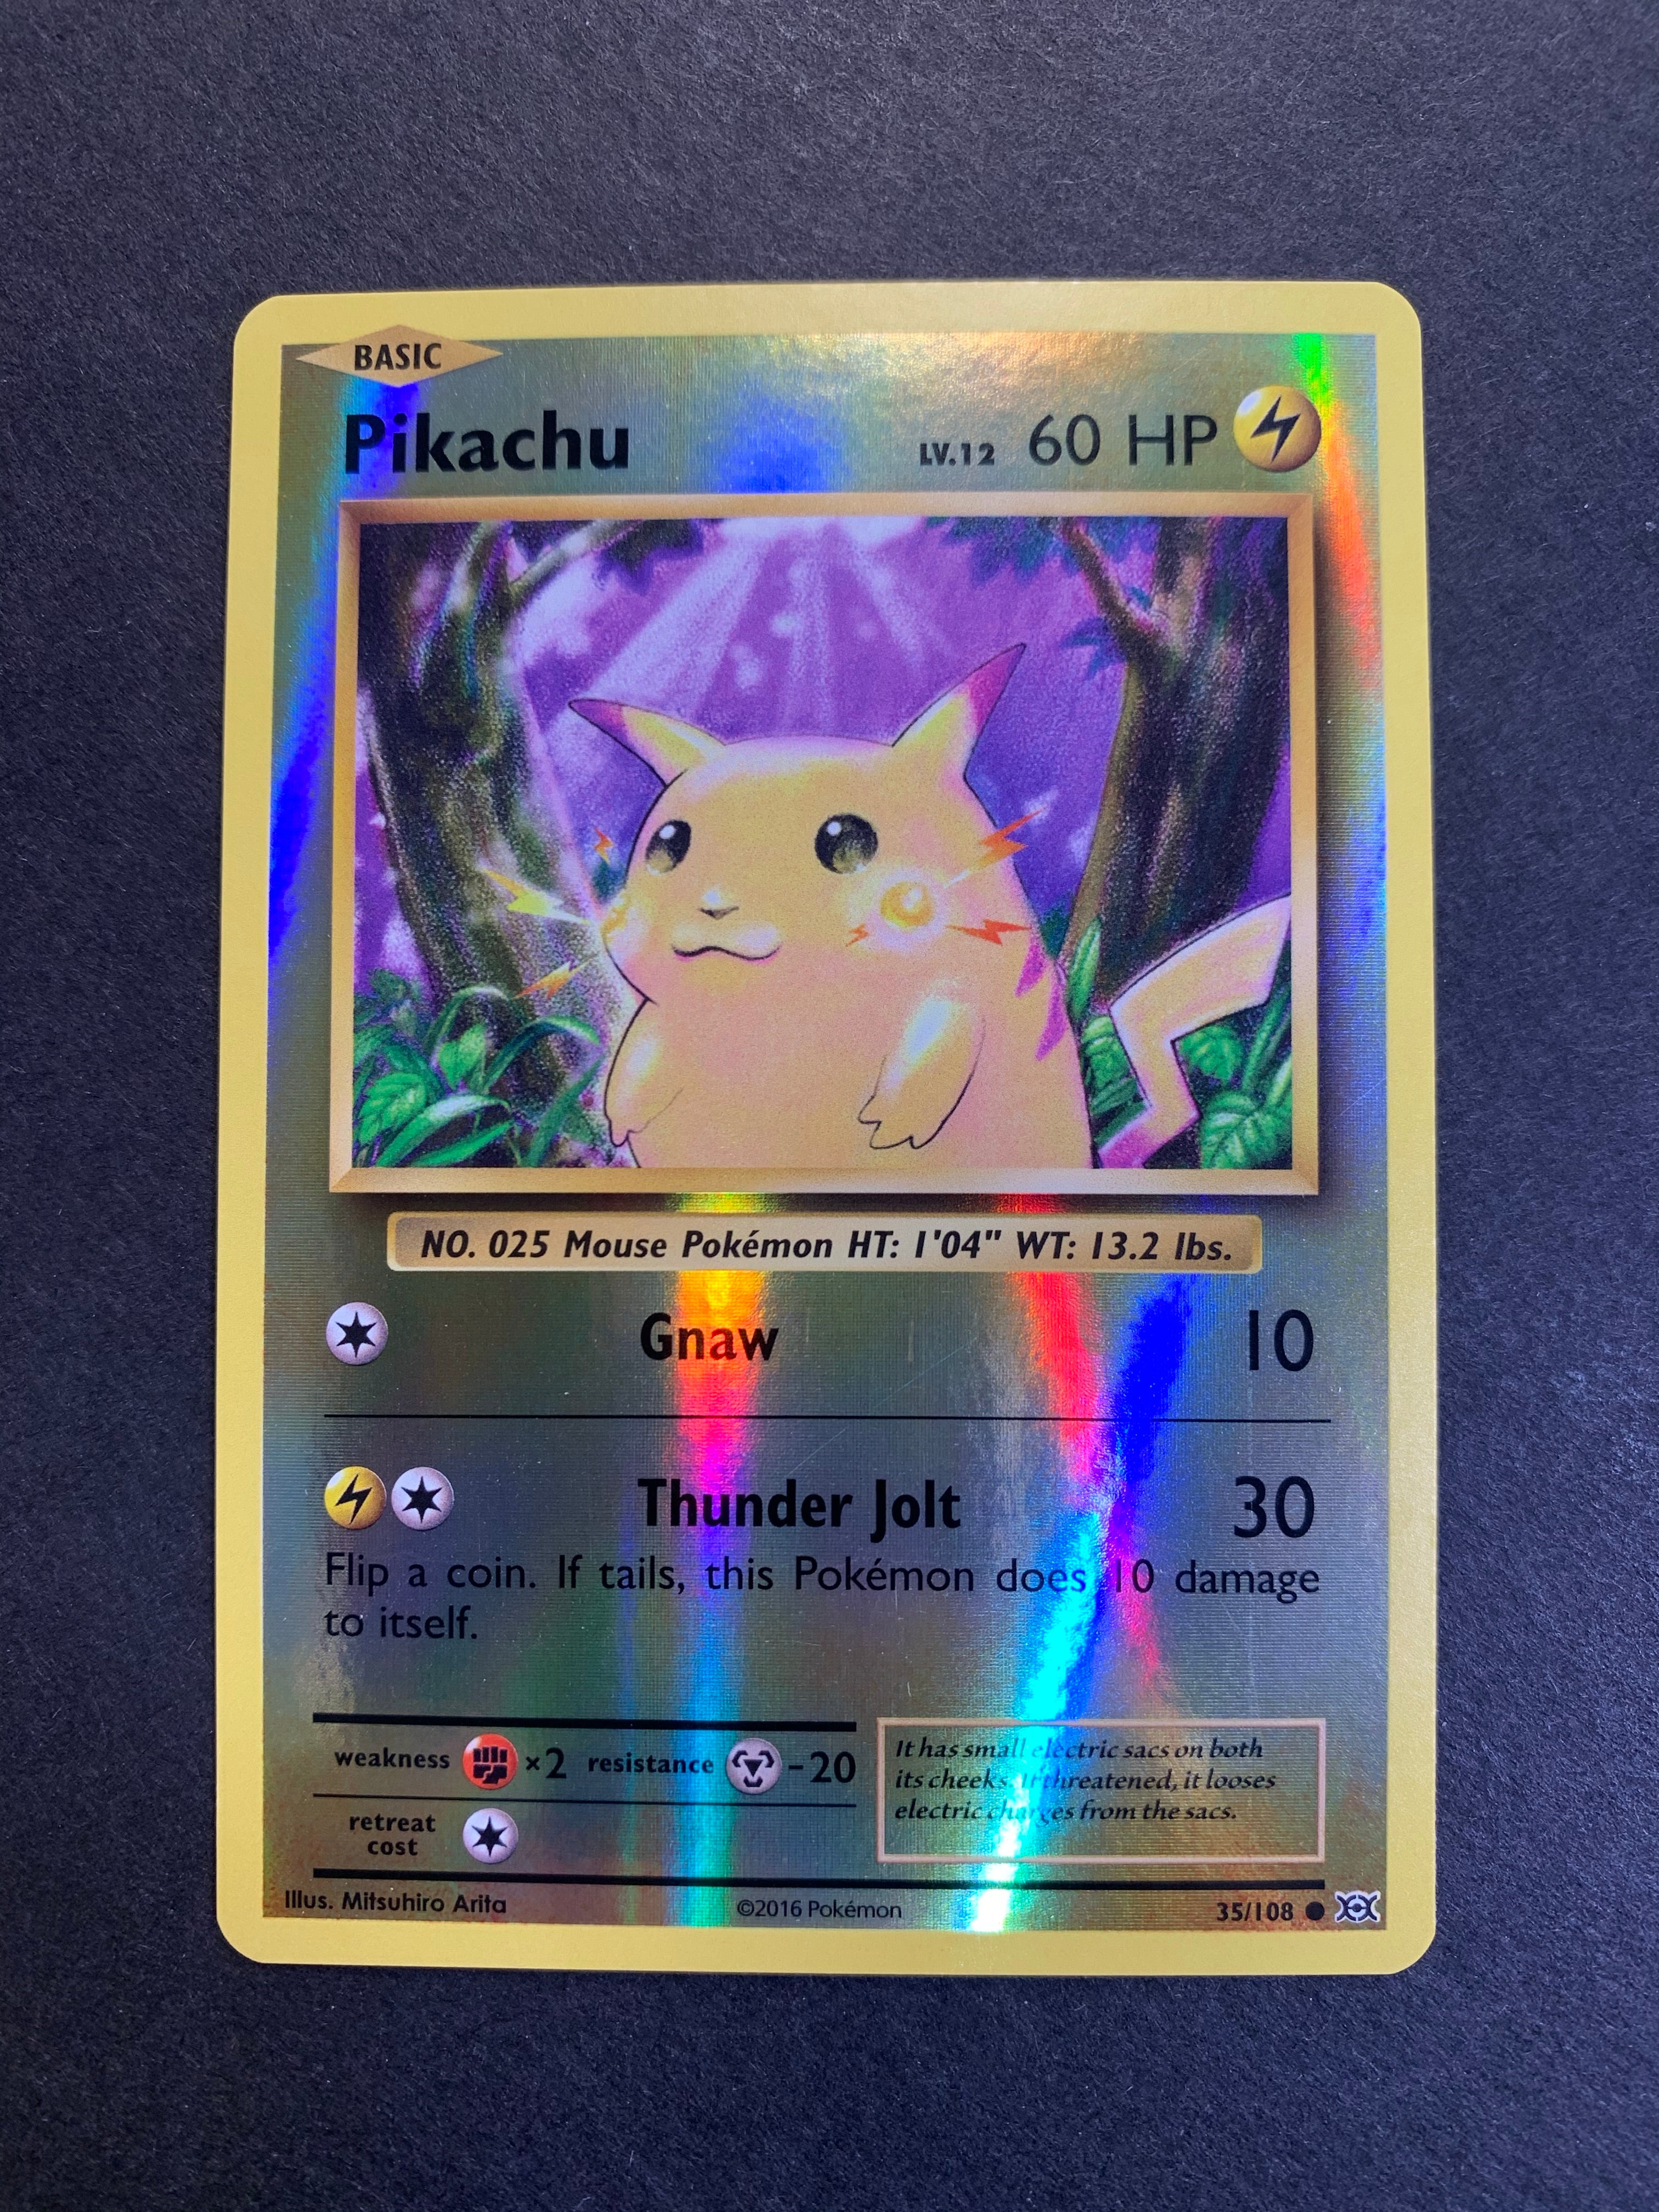 Pikachu 2016 pokemon card lv.12 60hp 35/108